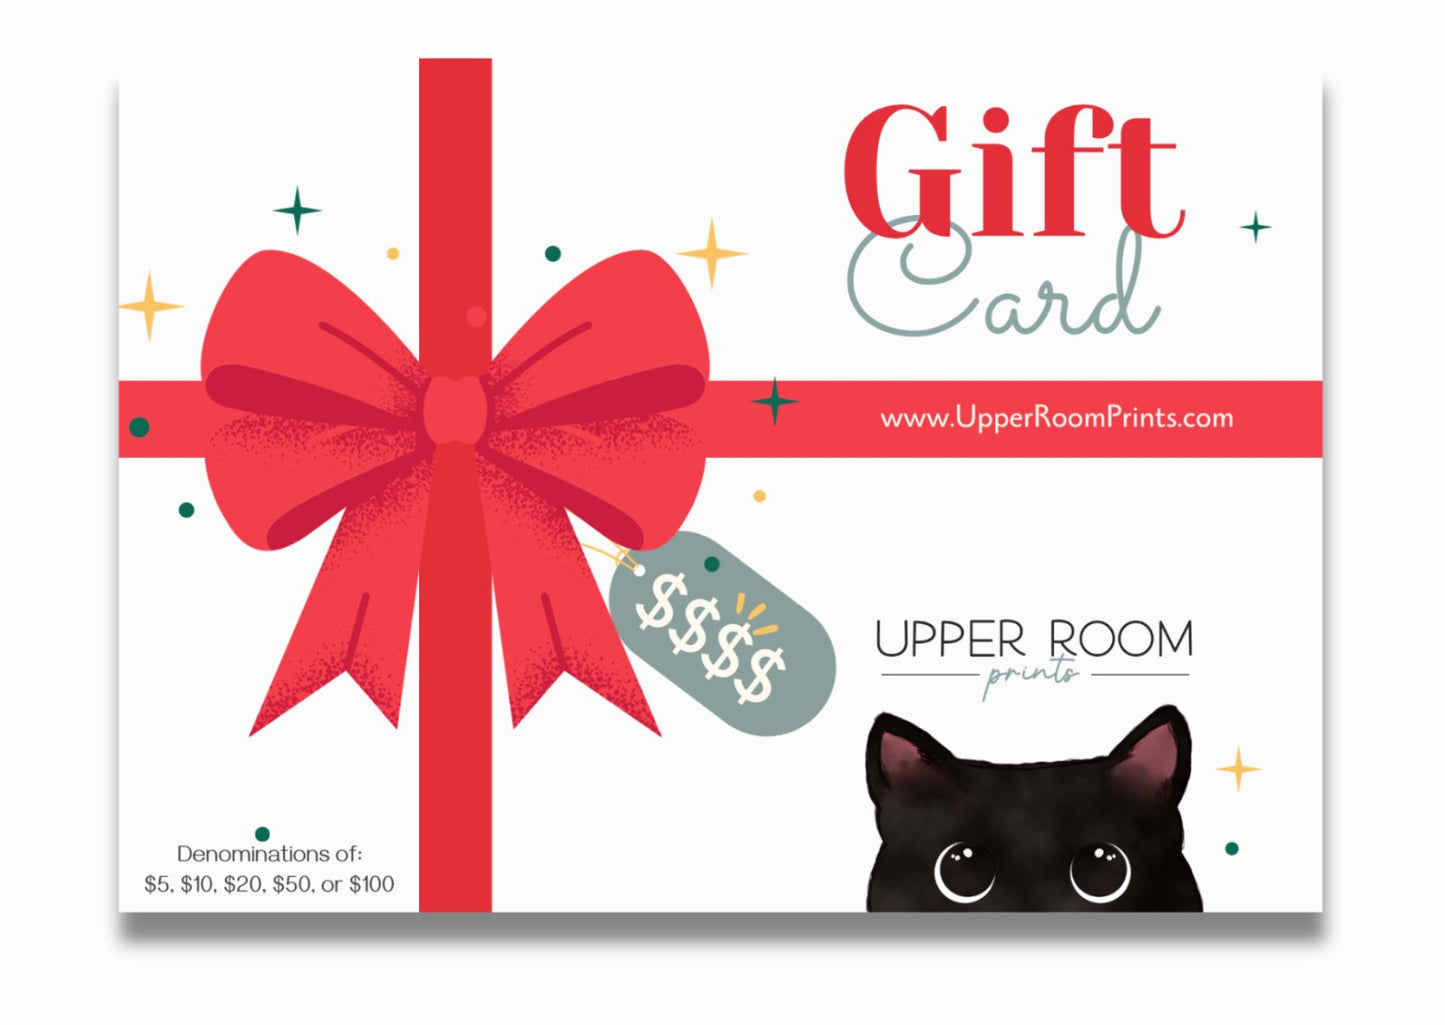 Upper Room Print Gift Card - Gift Card - UpperRoomPrints